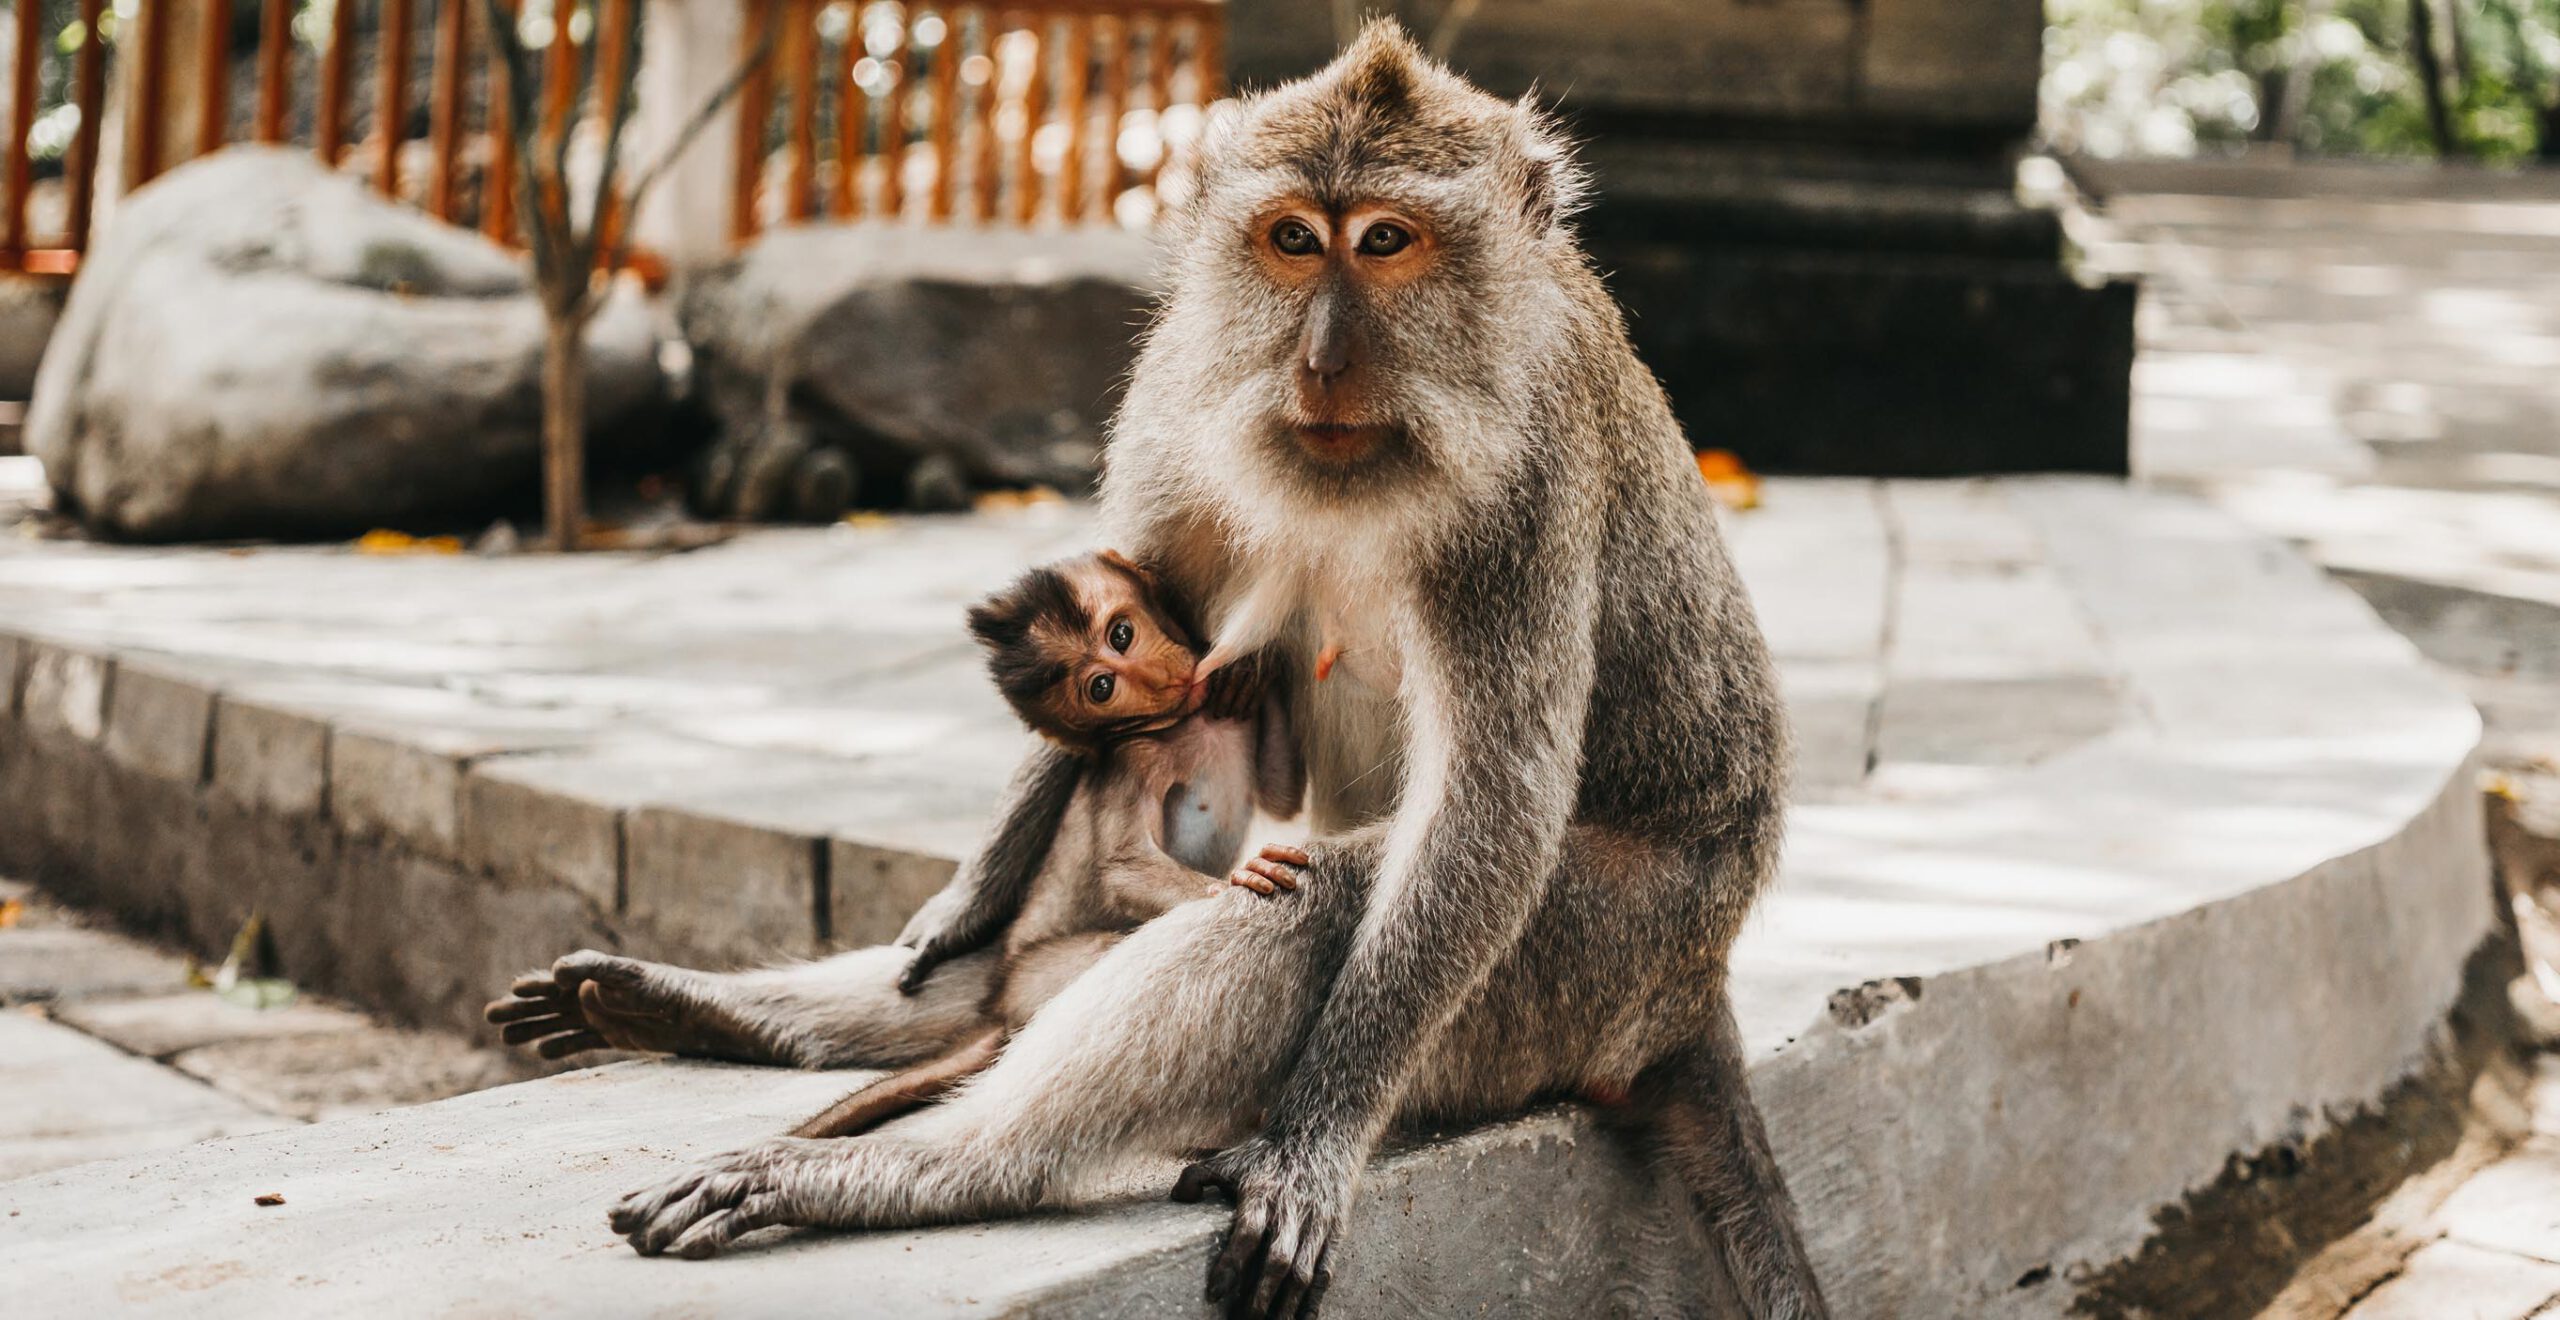 Indonesia monkey